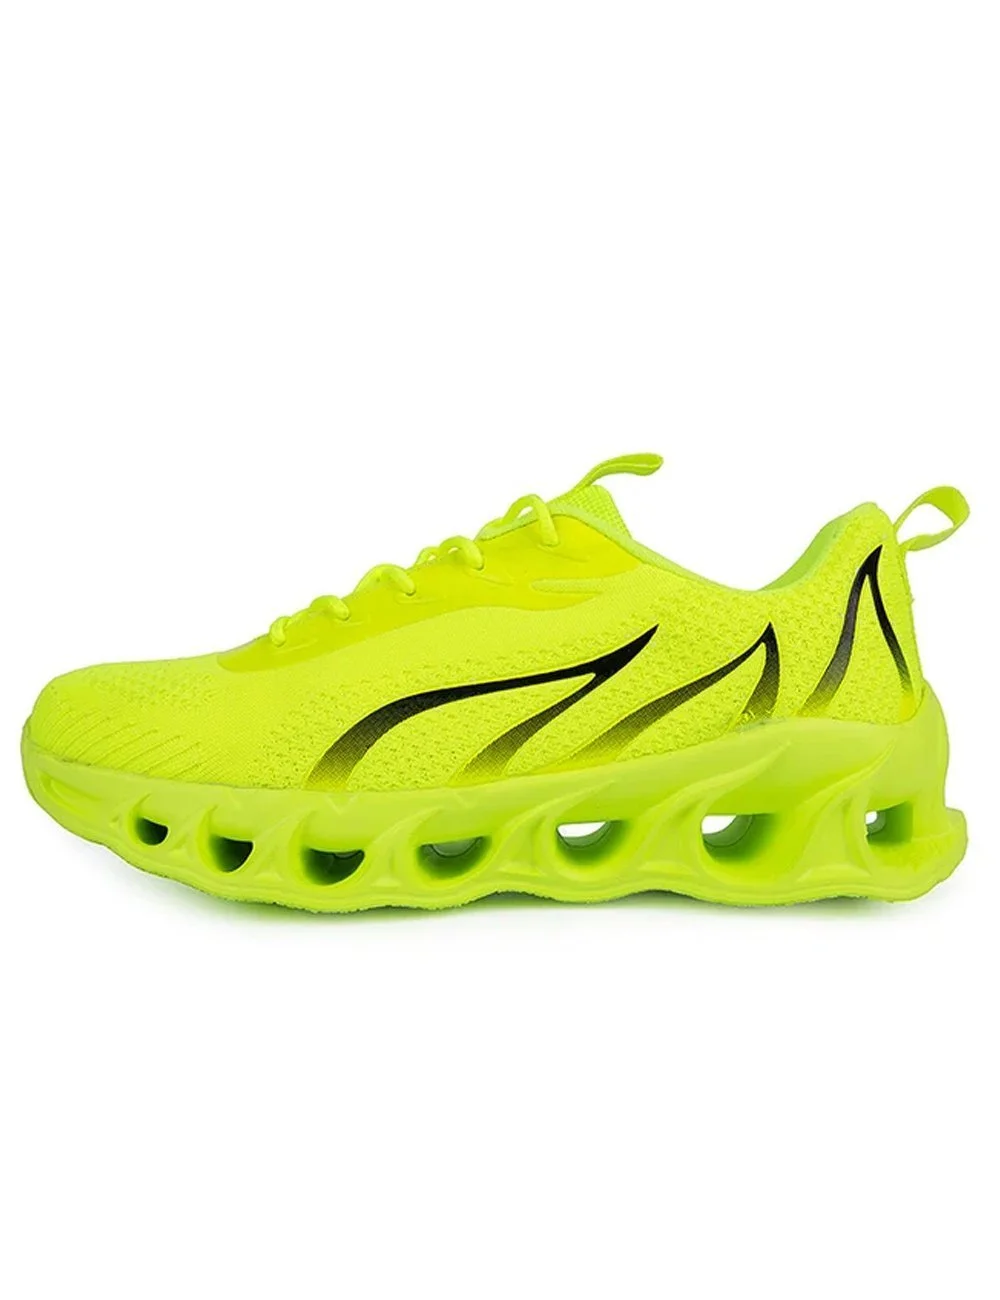 Men's Perfect Walking Shoes - Fluorescen